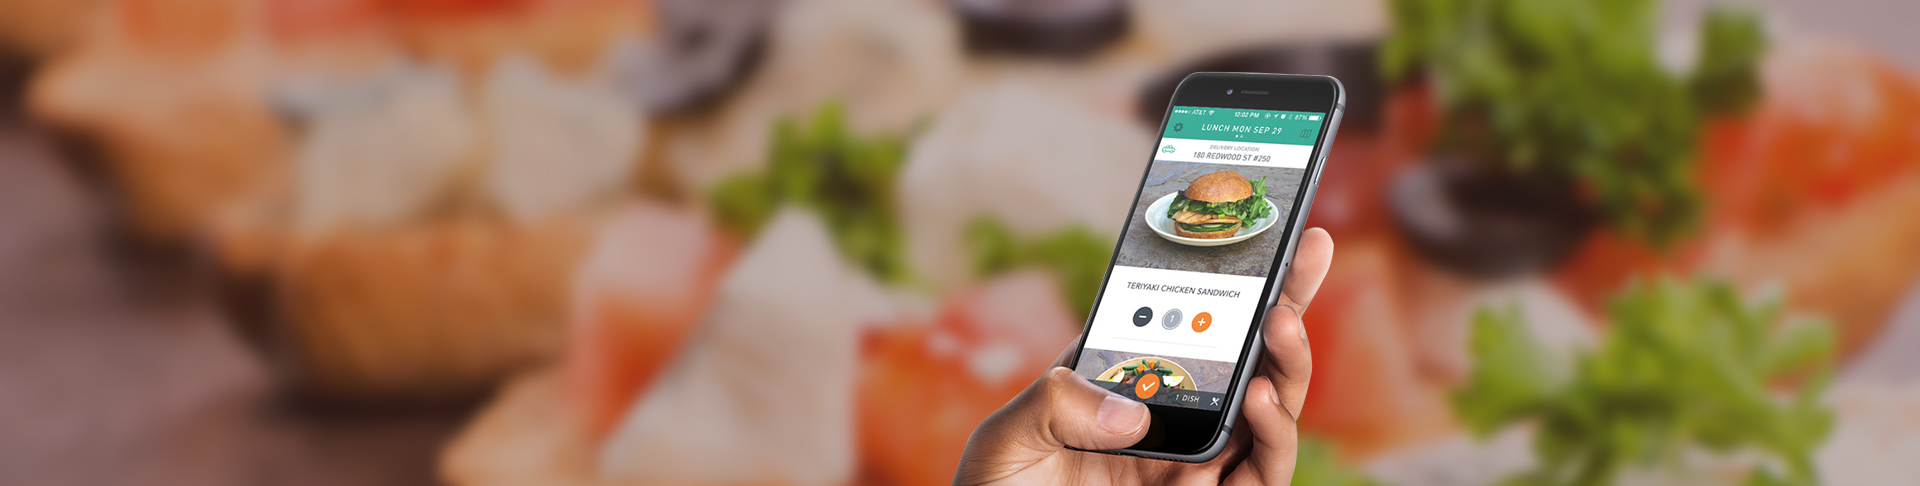 Food Delivery App Like Uber